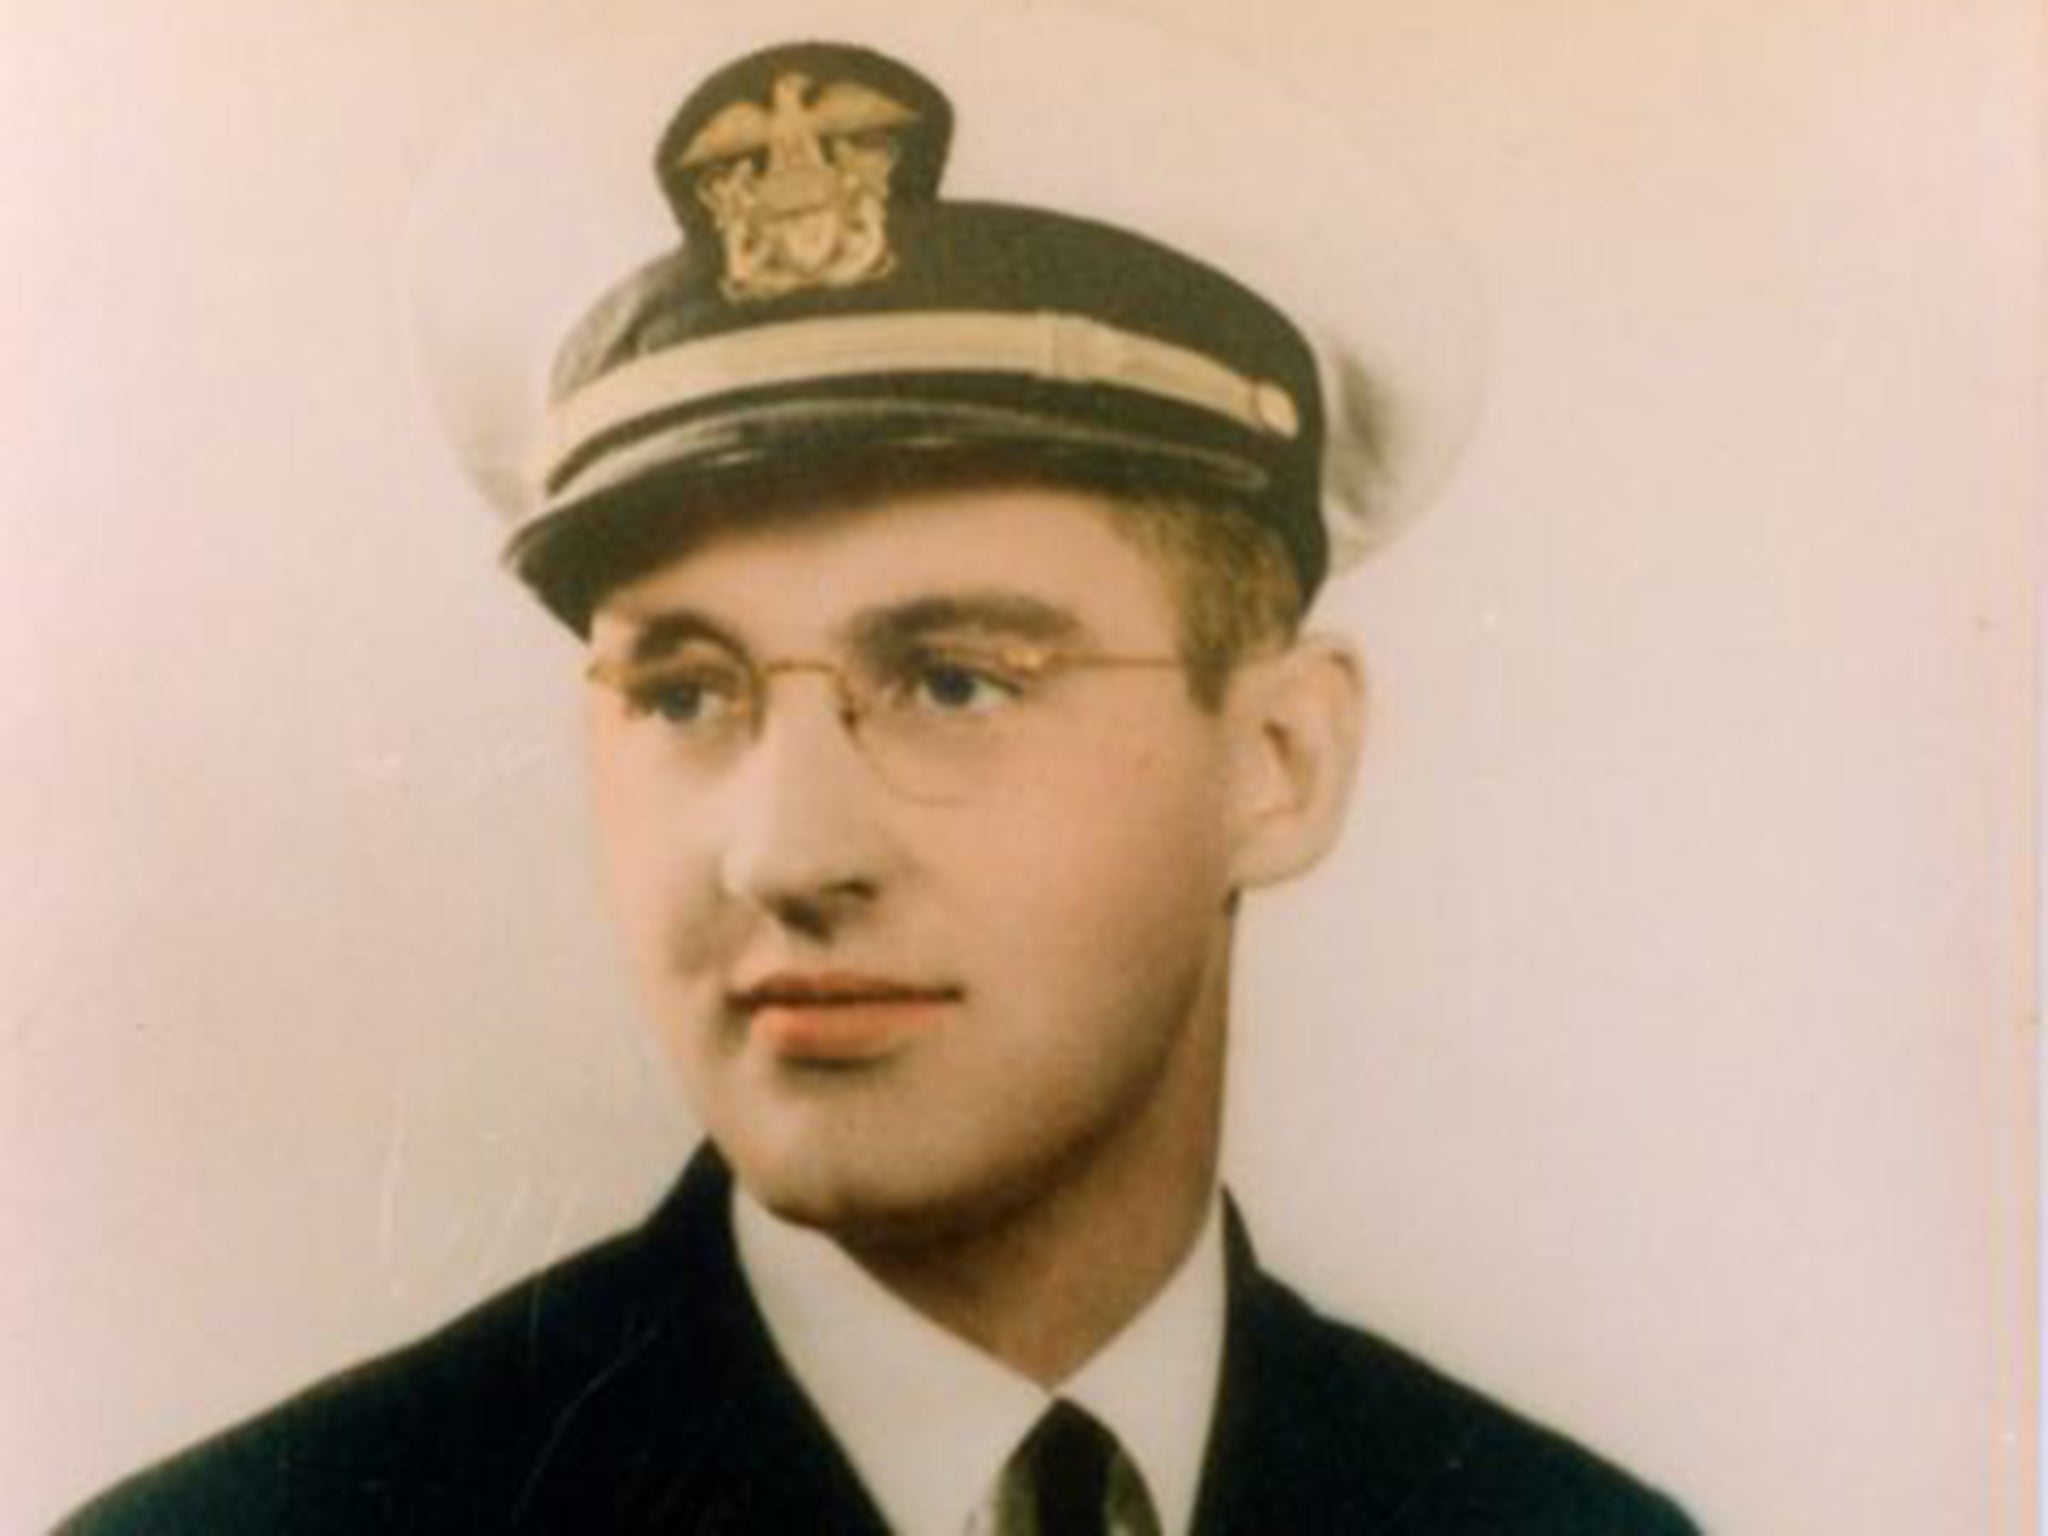 Aloysius Schmitt, the chaplain, helped other sailors escape the sinking ship through port holes